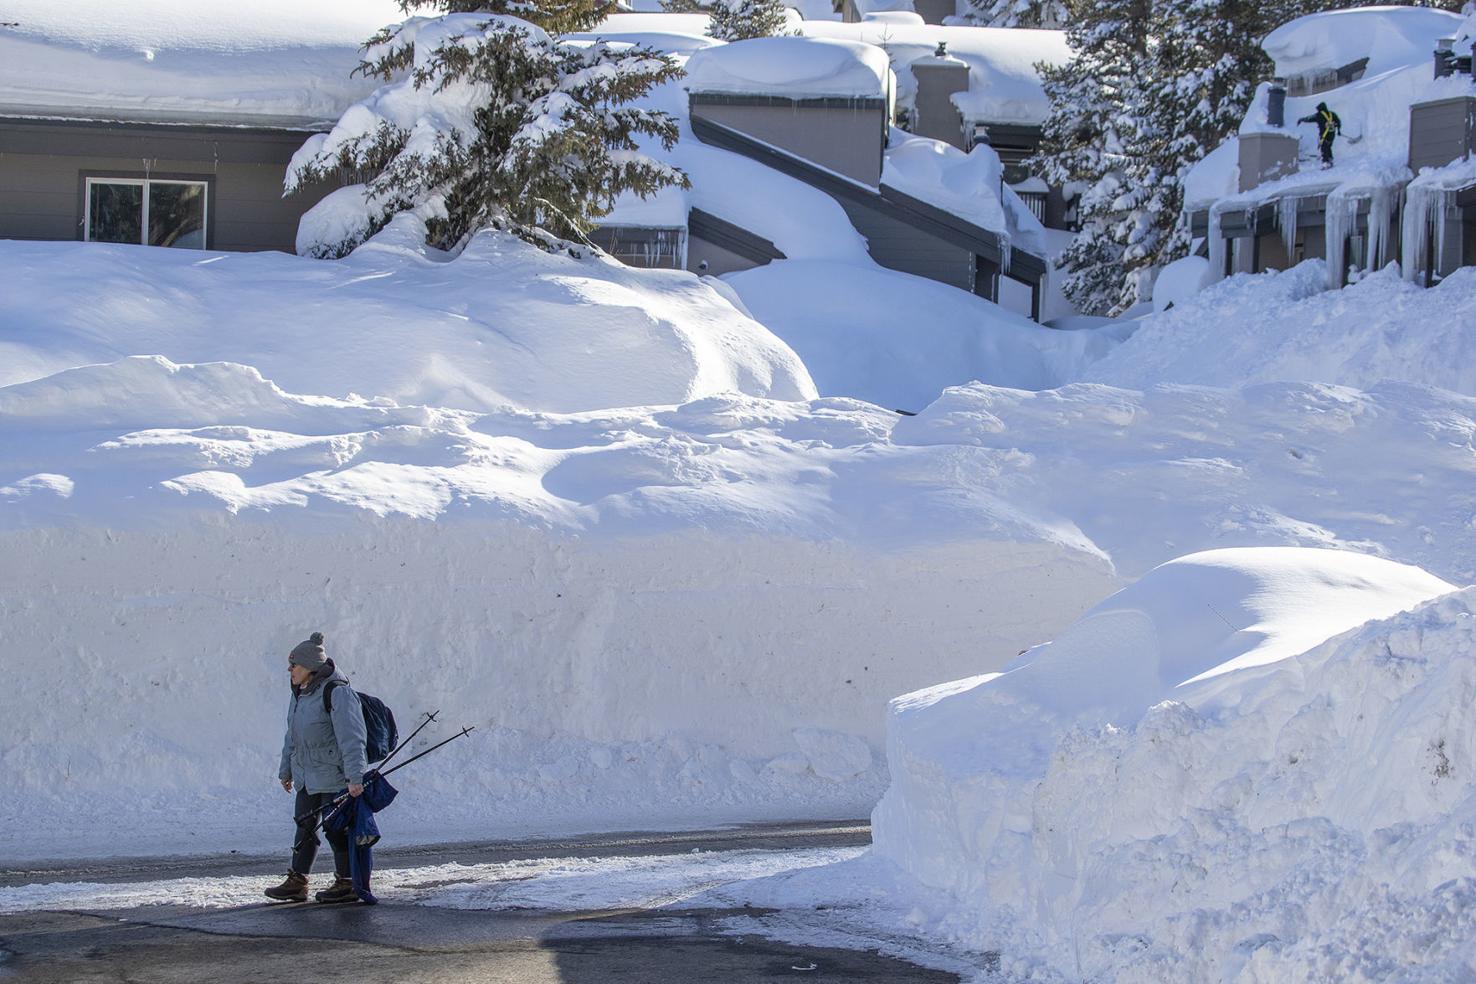 Photos of a 'Mammoth' snowfall California town gets hit with 10 feet